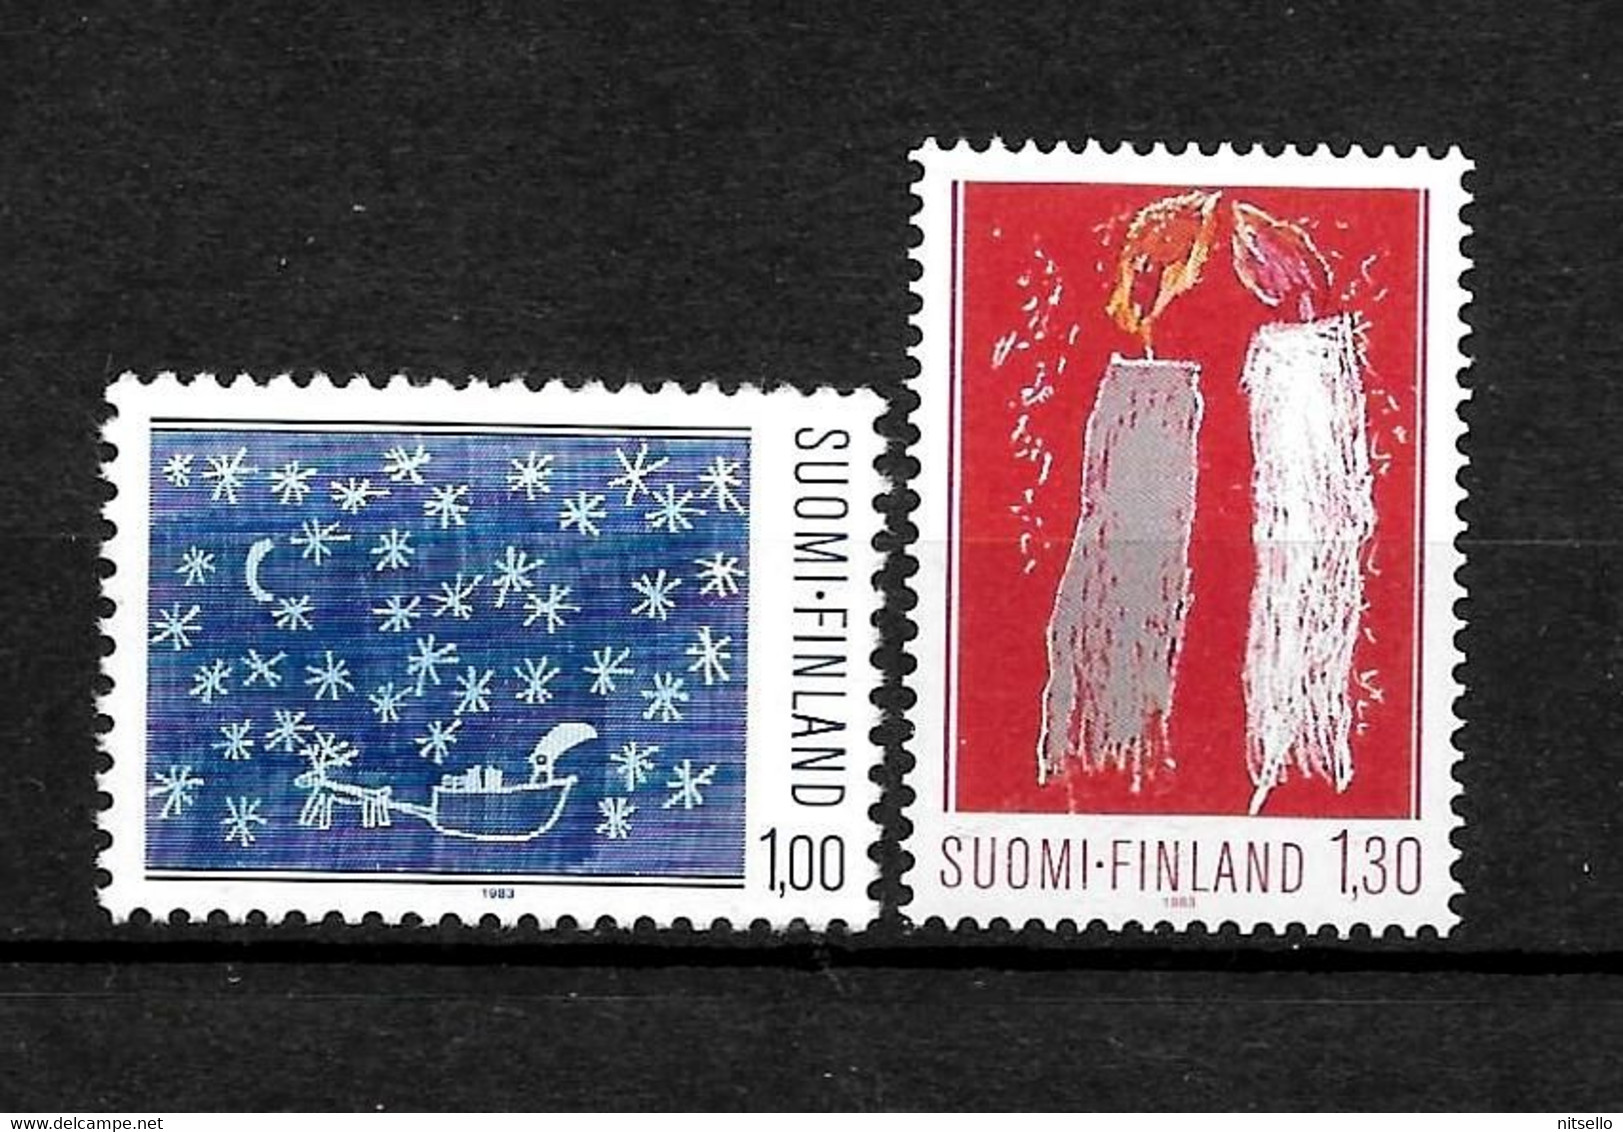 LOTE 2212 /// FINLANDIA - YVERT Nº: 899/900 **MNH ¡¡¡ OFERTA - LIQUIDATION - JE LIQUIDE !!! - Unused Stamps